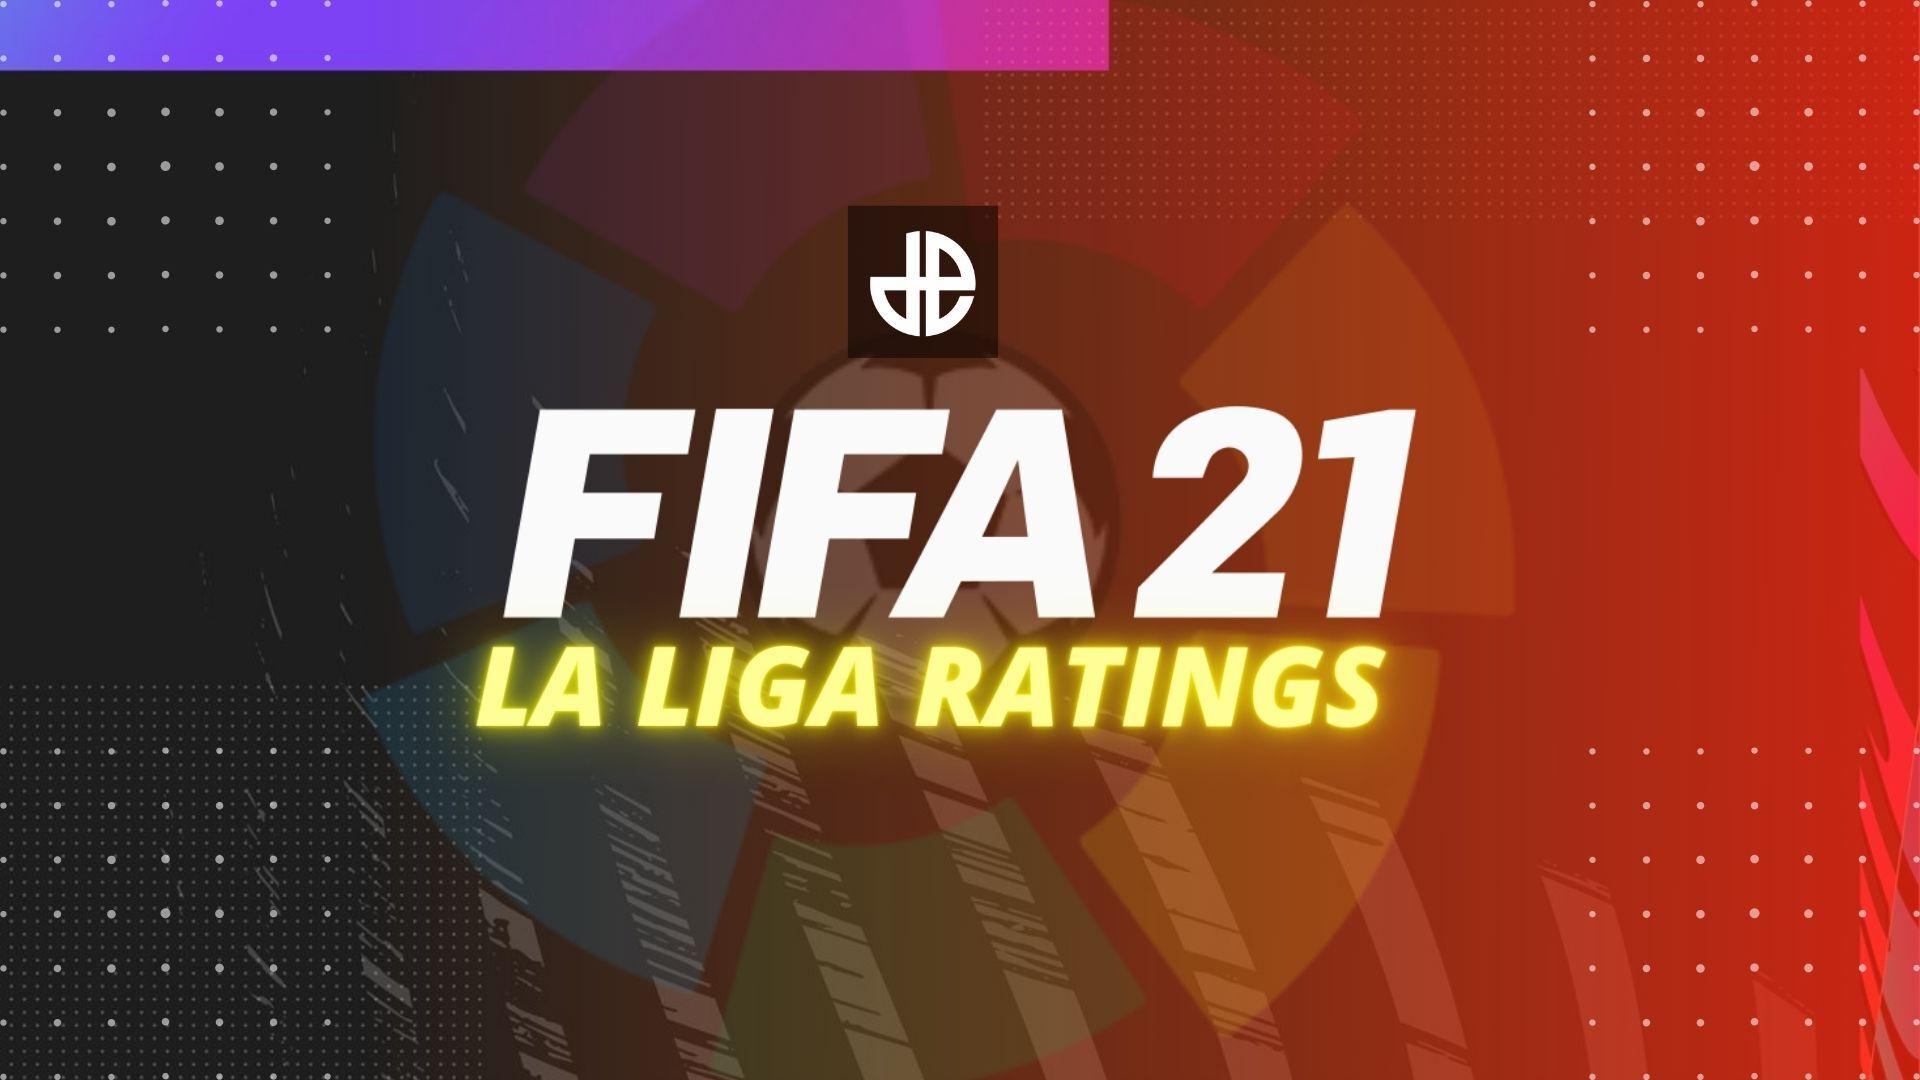 FIFA 21 La Liga ratings